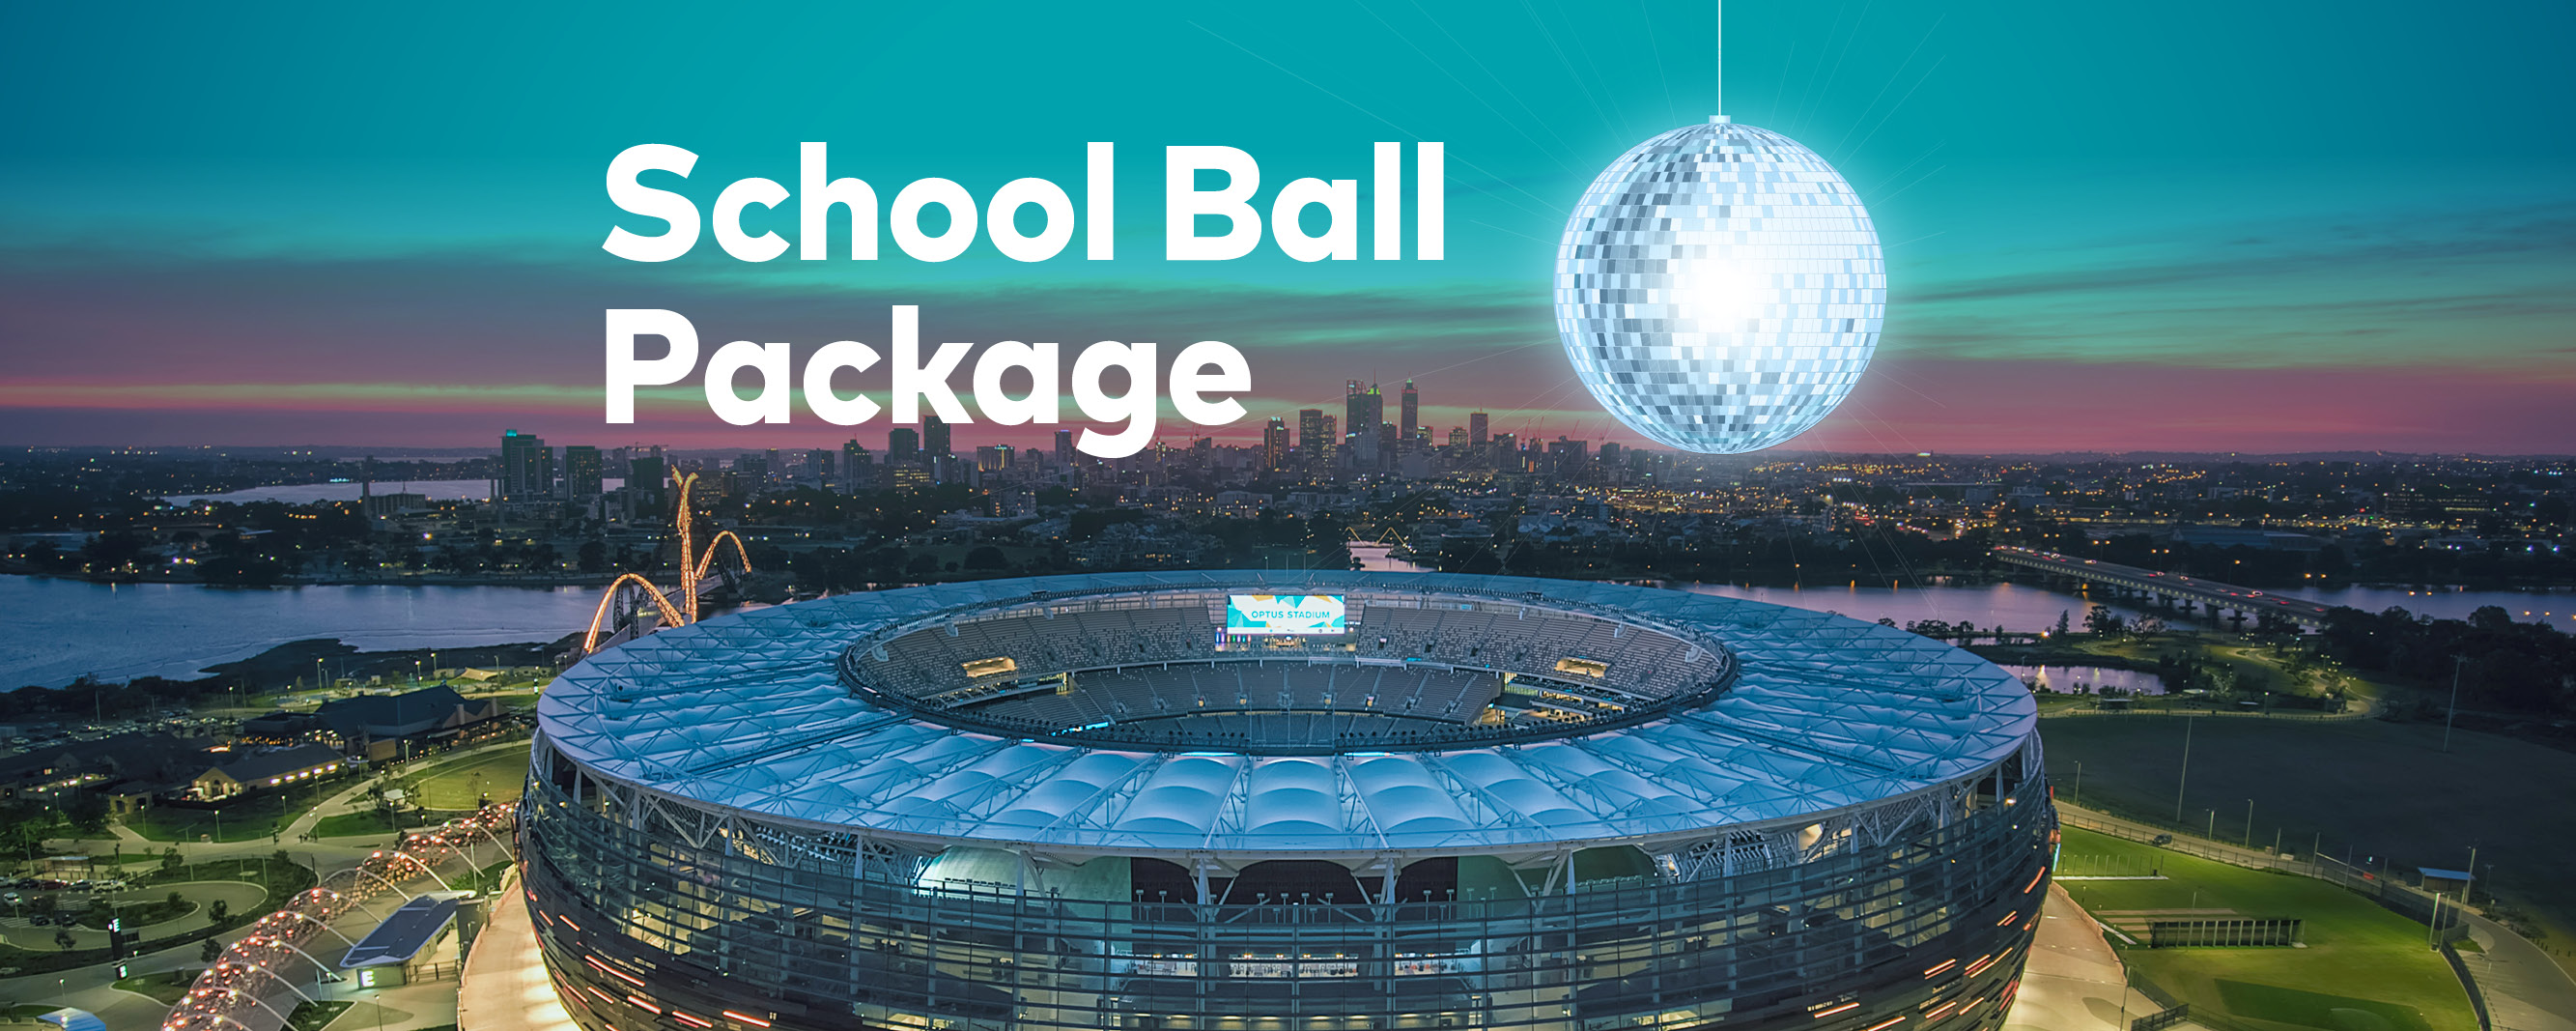 School Ball Package